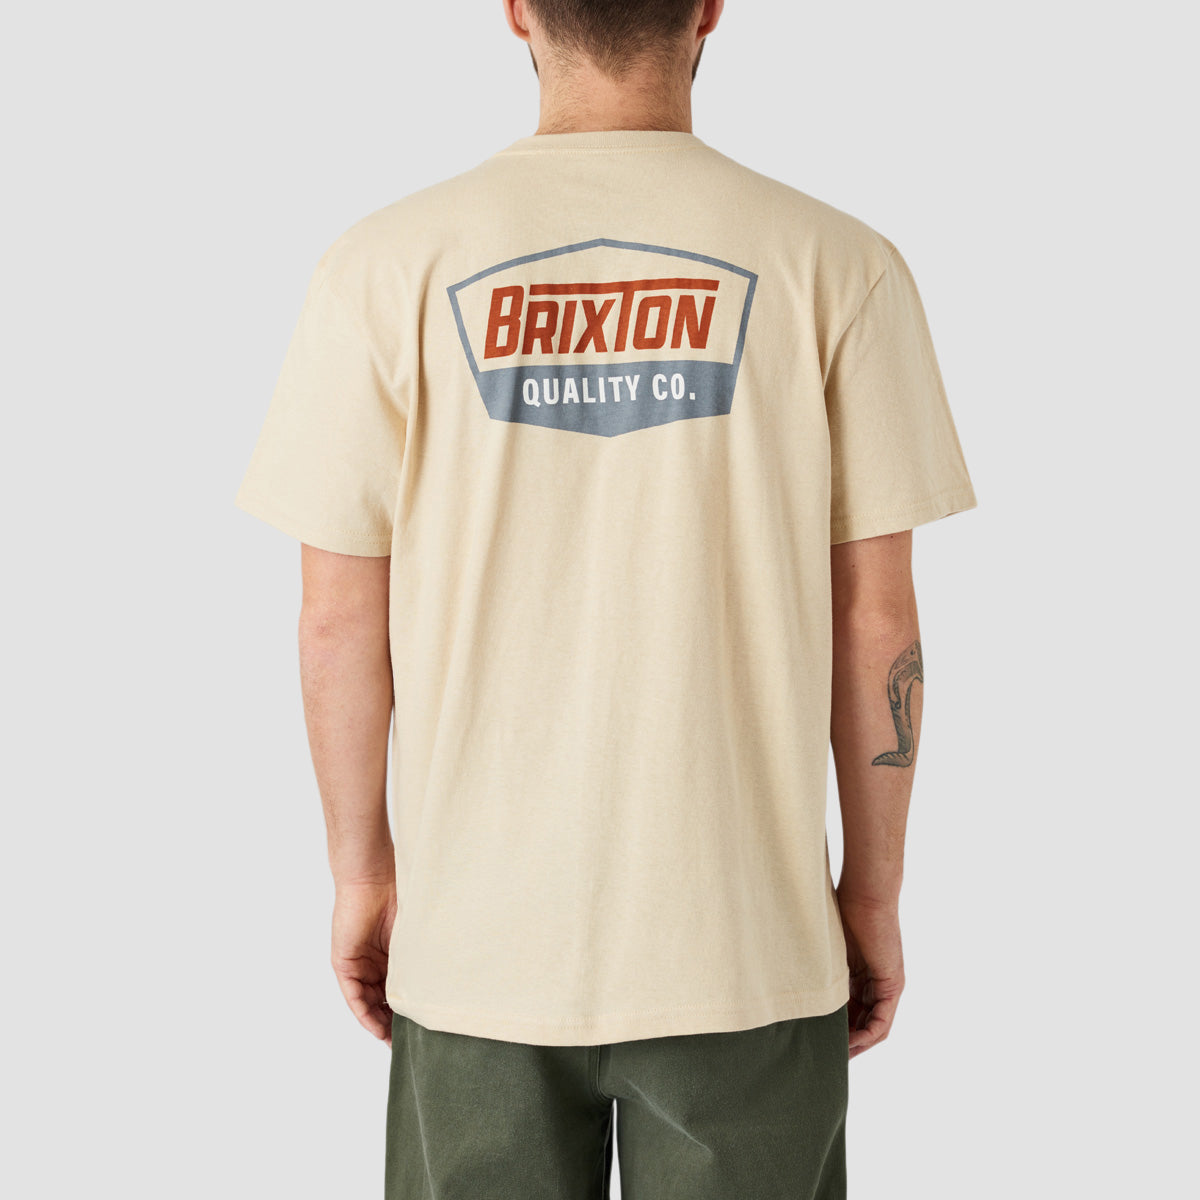 Brixton Regal T-Shirt Cream/Barn Red